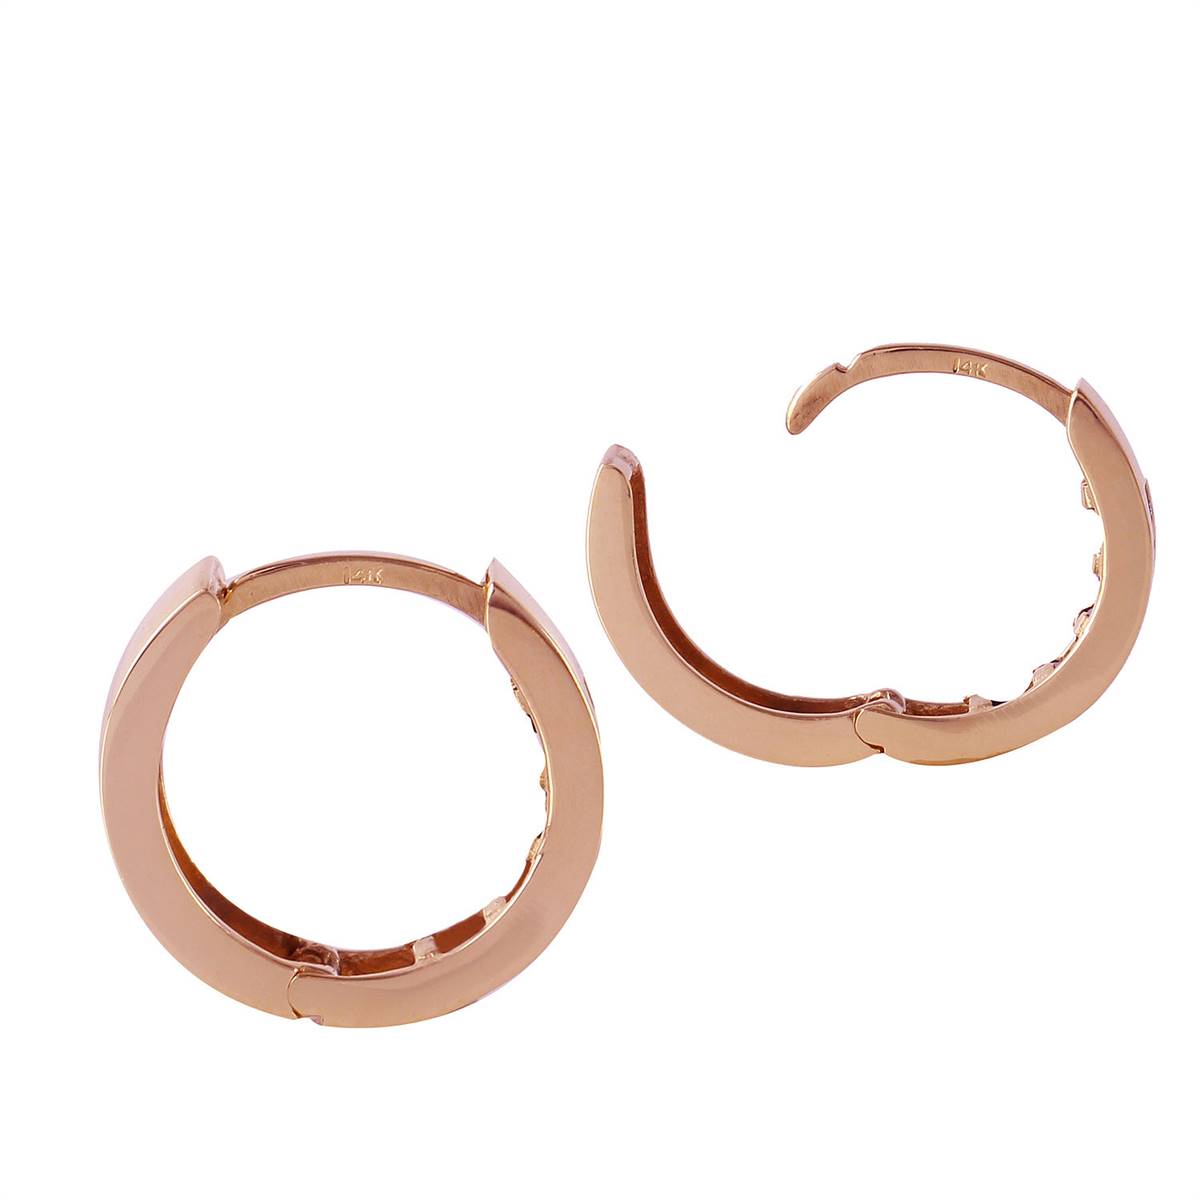 1.26 Carat 14K Solid Rose Gold Hoop Earrings Natural Ruby Rose Topaz